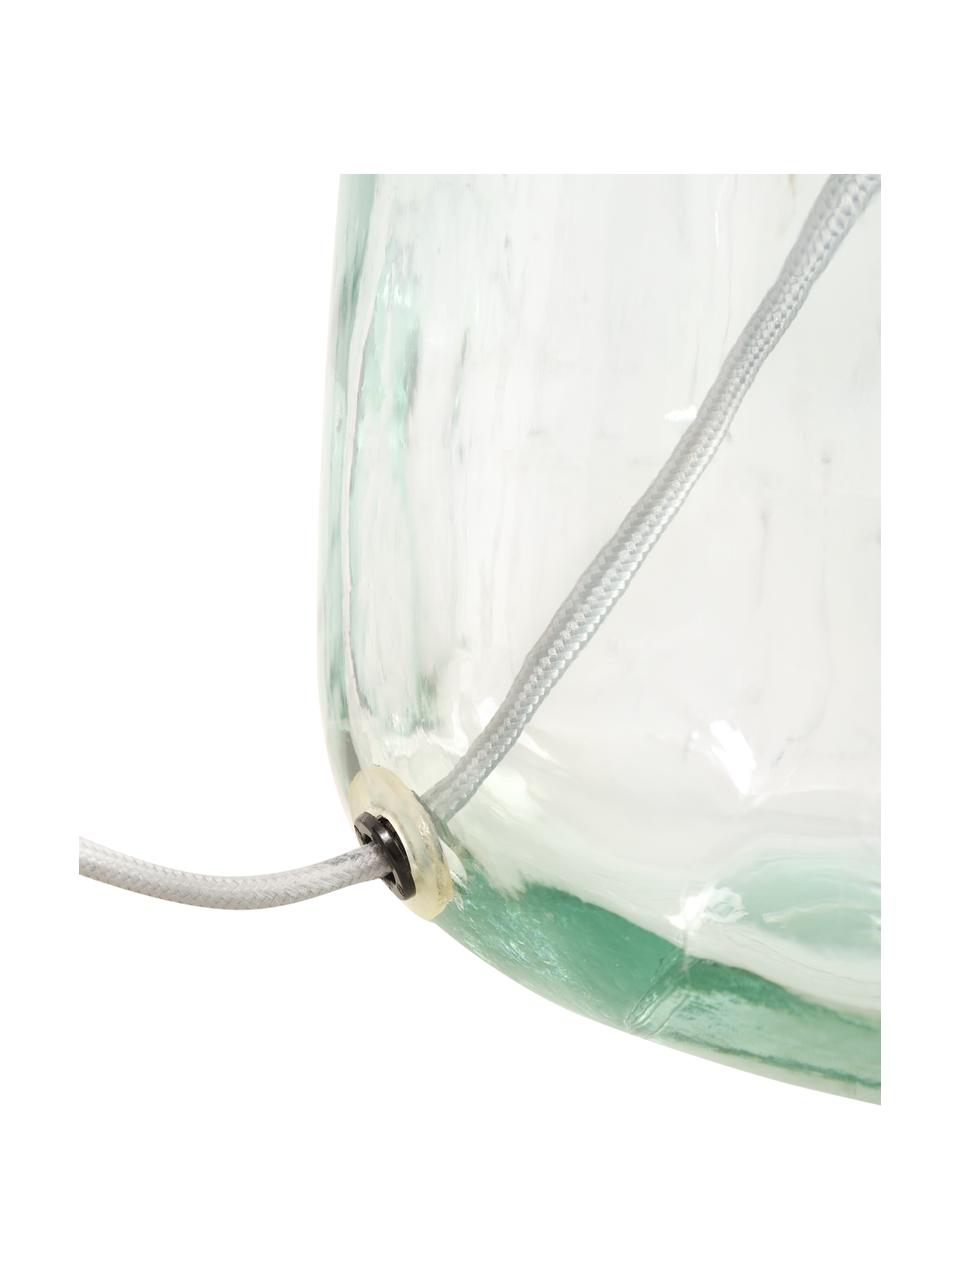 Tischlampe Murano aus recycletem Glas, Lampenschirm: Leinenstoff, Lampenfuß: Recycletes Glas, Dunkelblau, Transparent, Grau, Ø 32 cm x H 34 cm